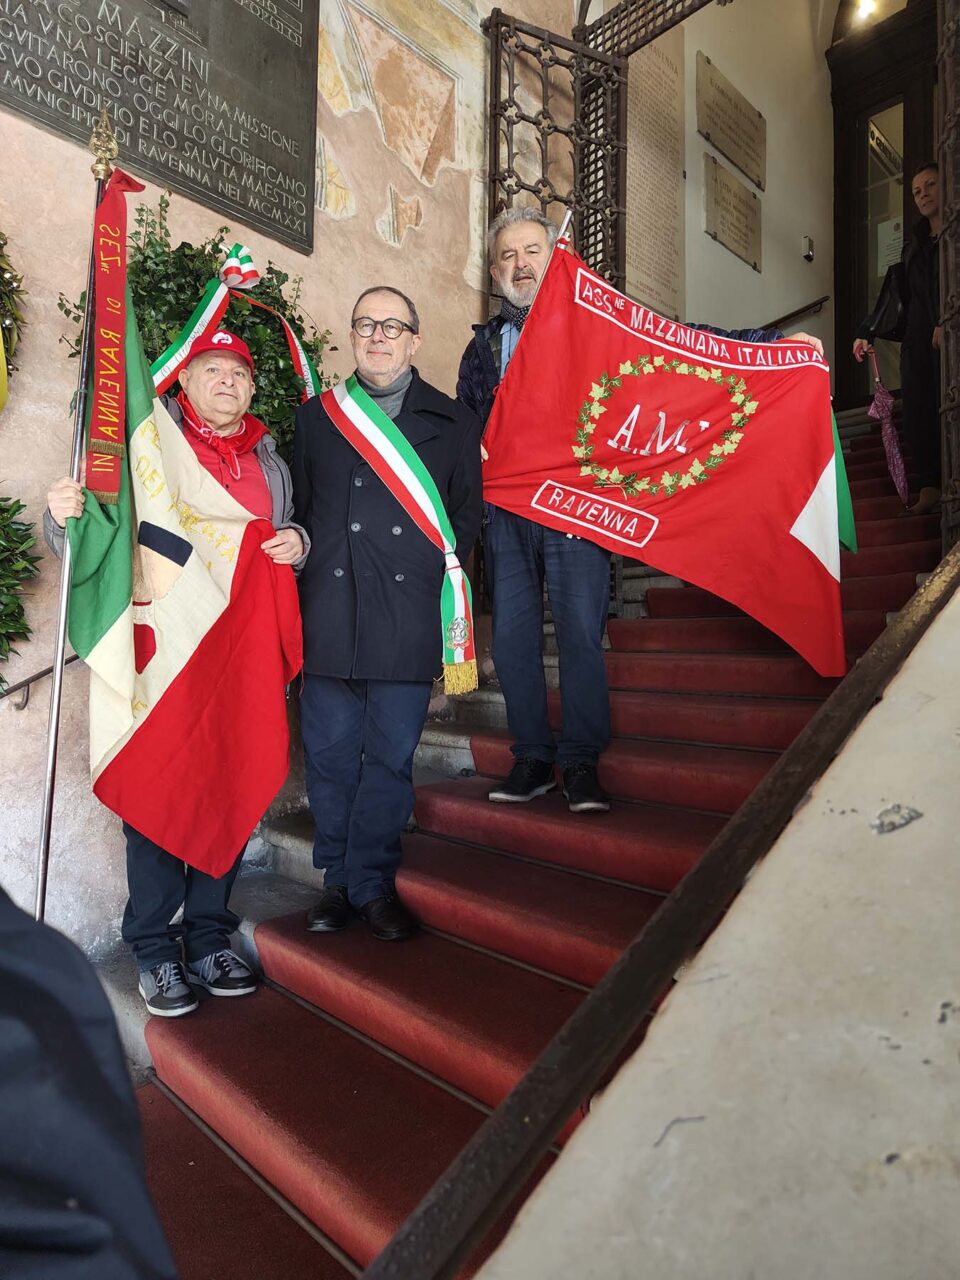 Vice Sindaco Ravenna con Bandiere ANVRG e AMI